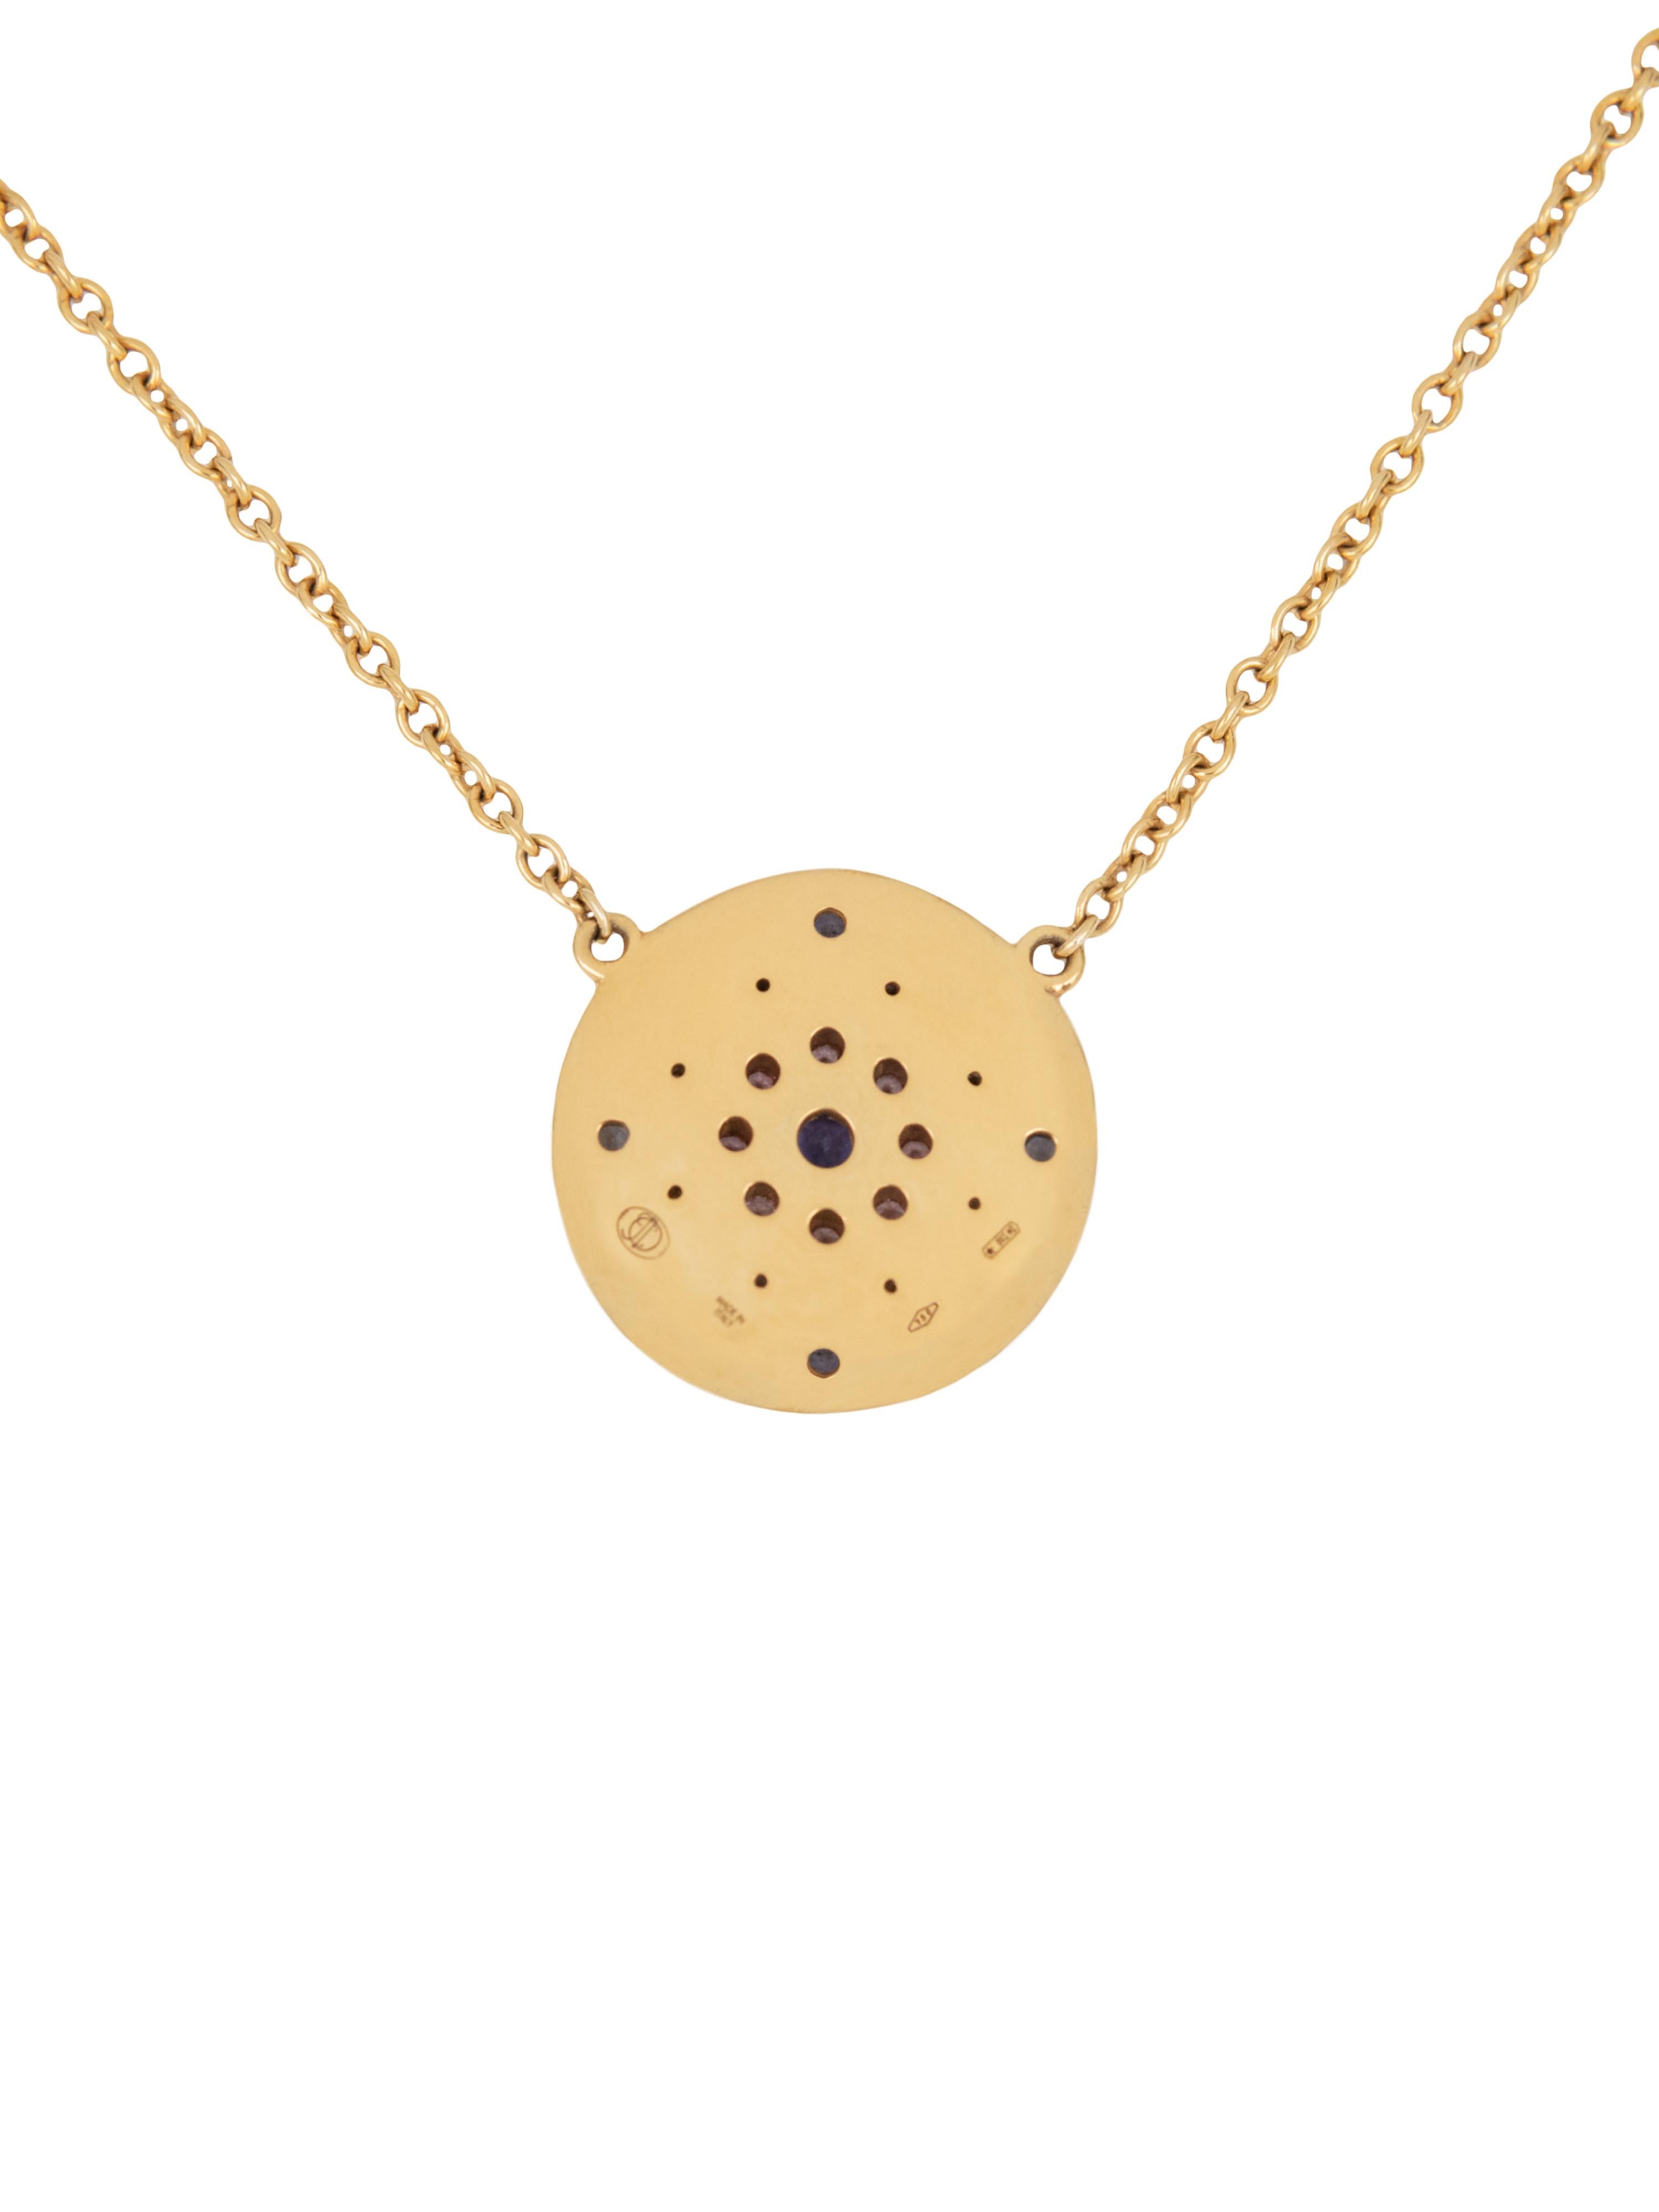 Contemporary Julia-Didon Cayre 18 Karat Yellow Gold Diamond and Sapphire Chain Necklace